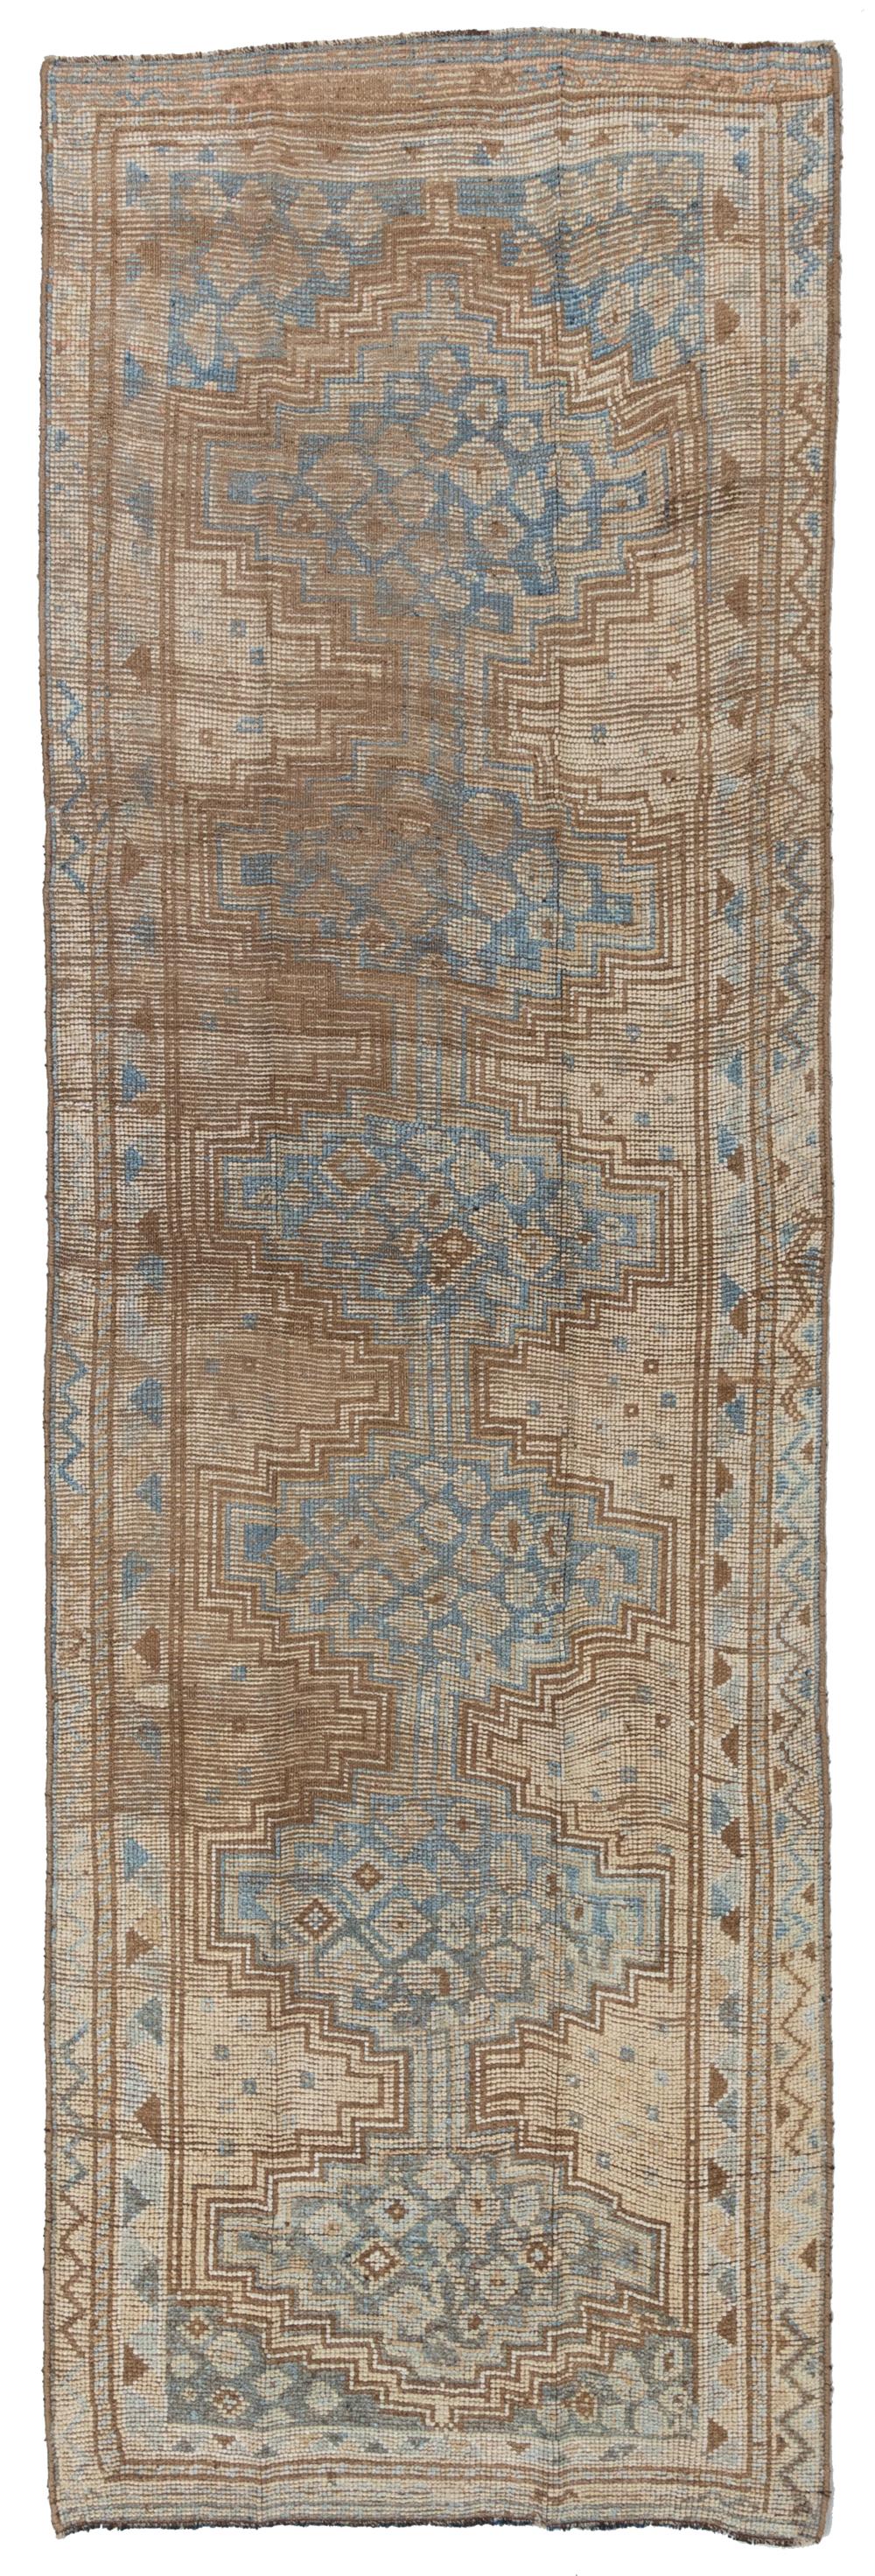 19th Century Antique Persian Shiraz Runner Rug